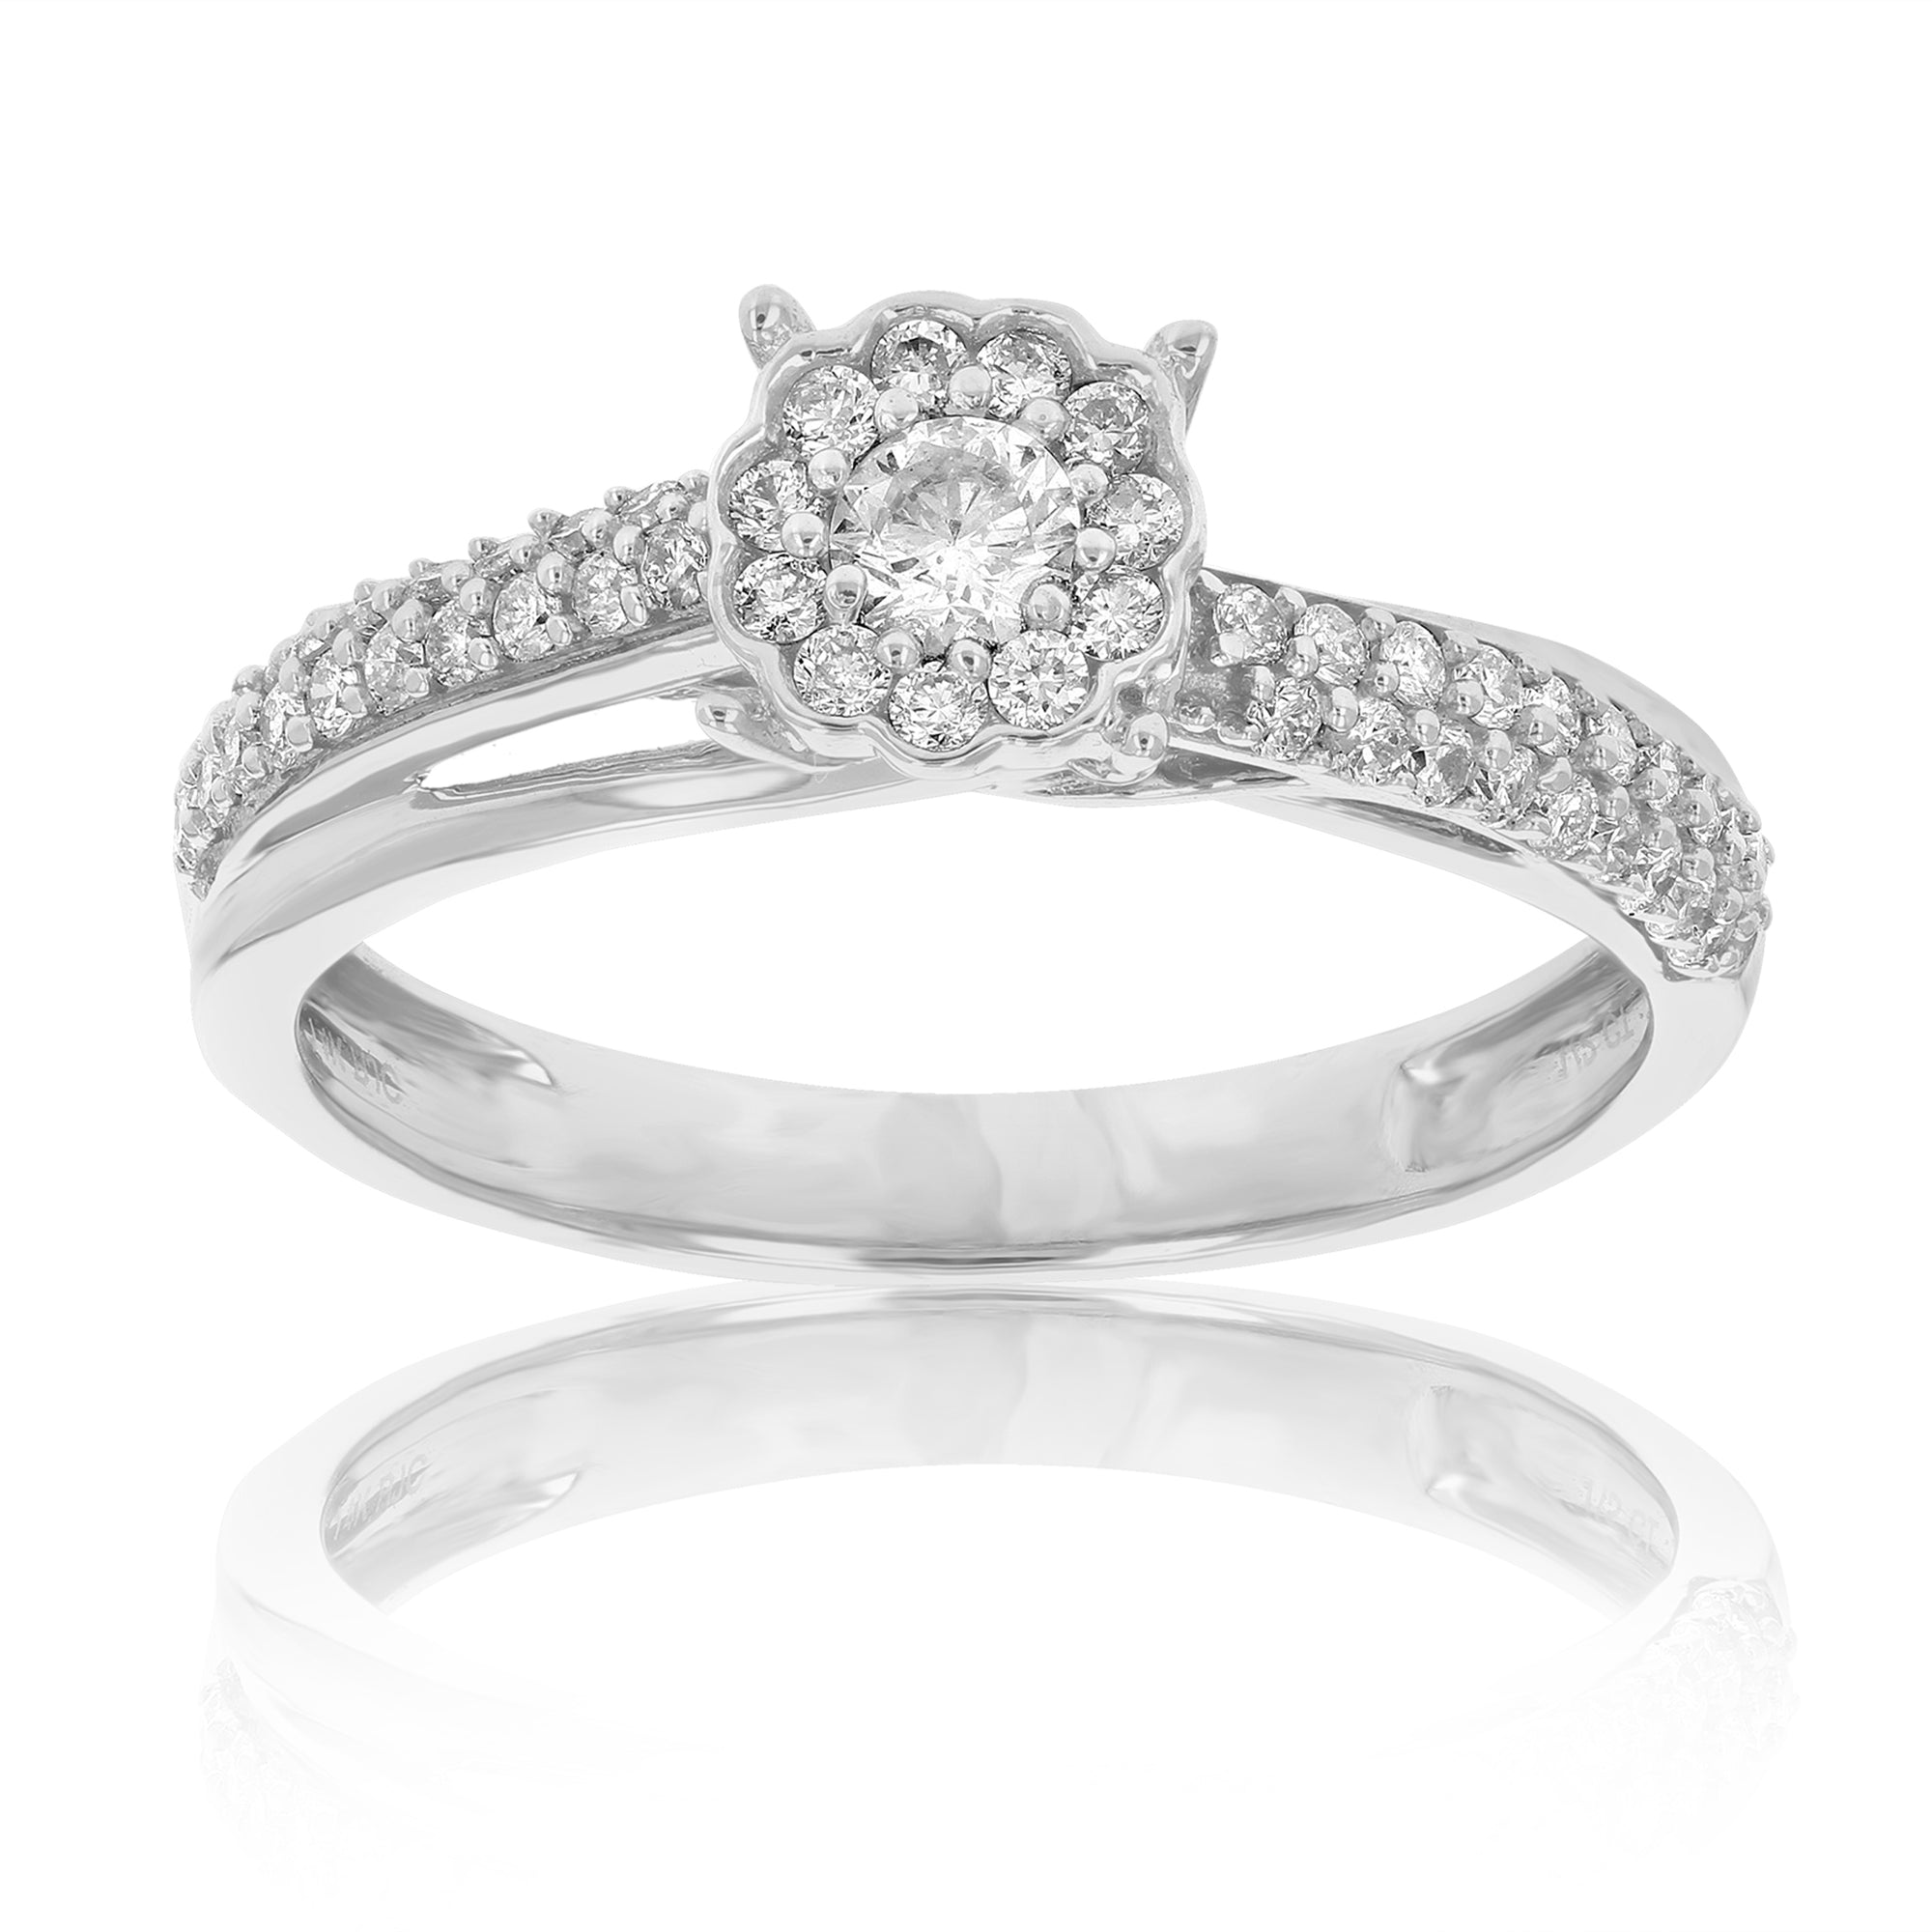 1/2 cttw Diamond Engagement Ring 14K White Gold Cluster Composite Bridal Wedding